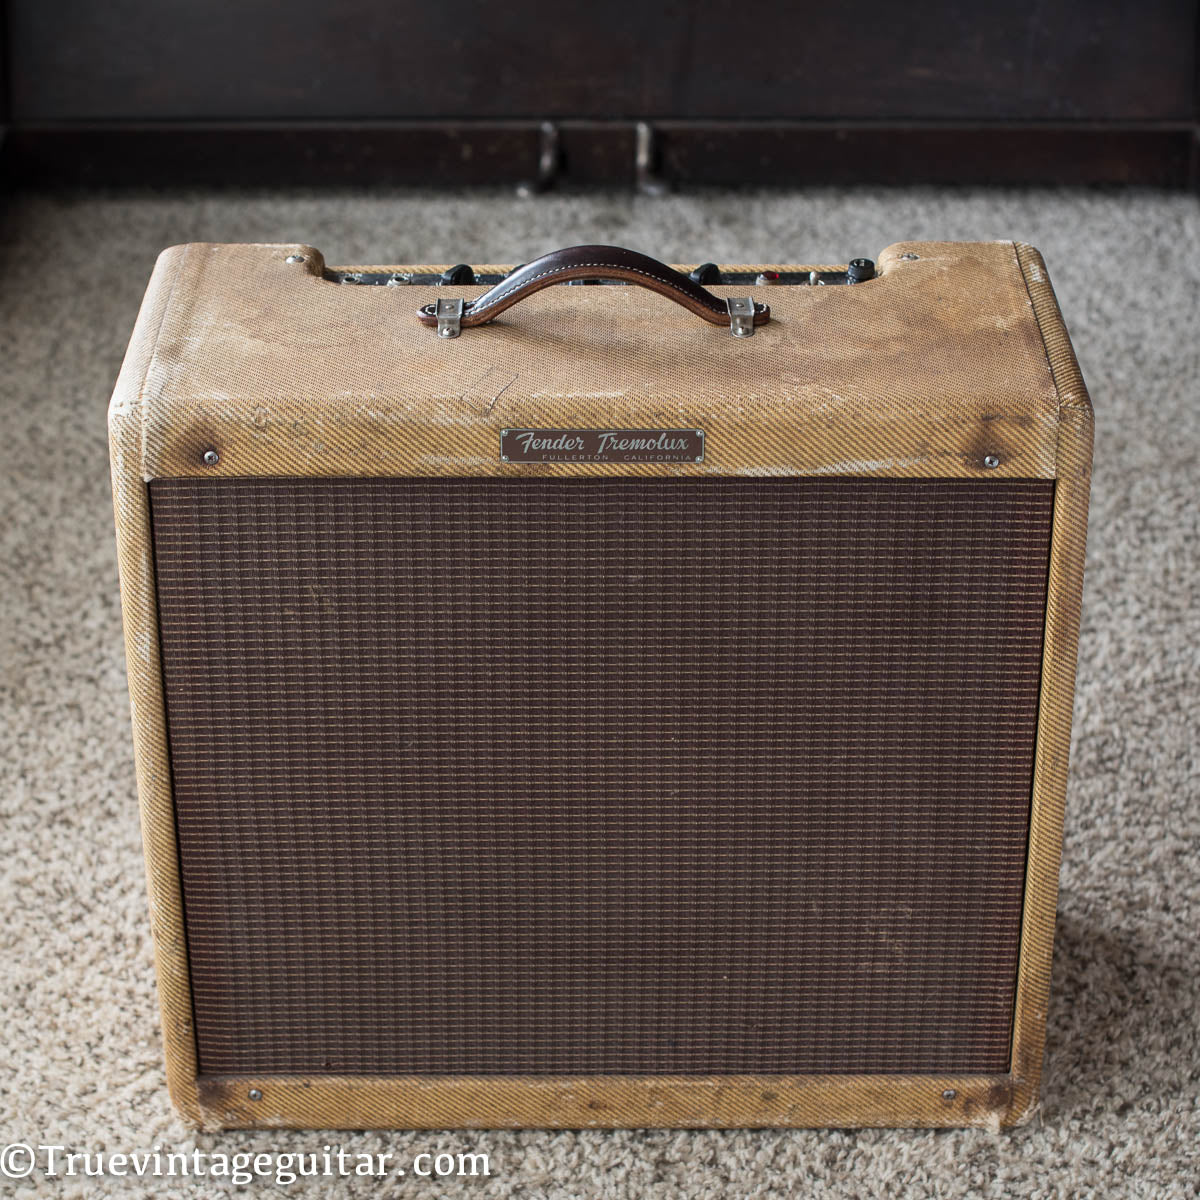 Vintage 1960 Fender Tremolux 5G9 Guitar Amplifier